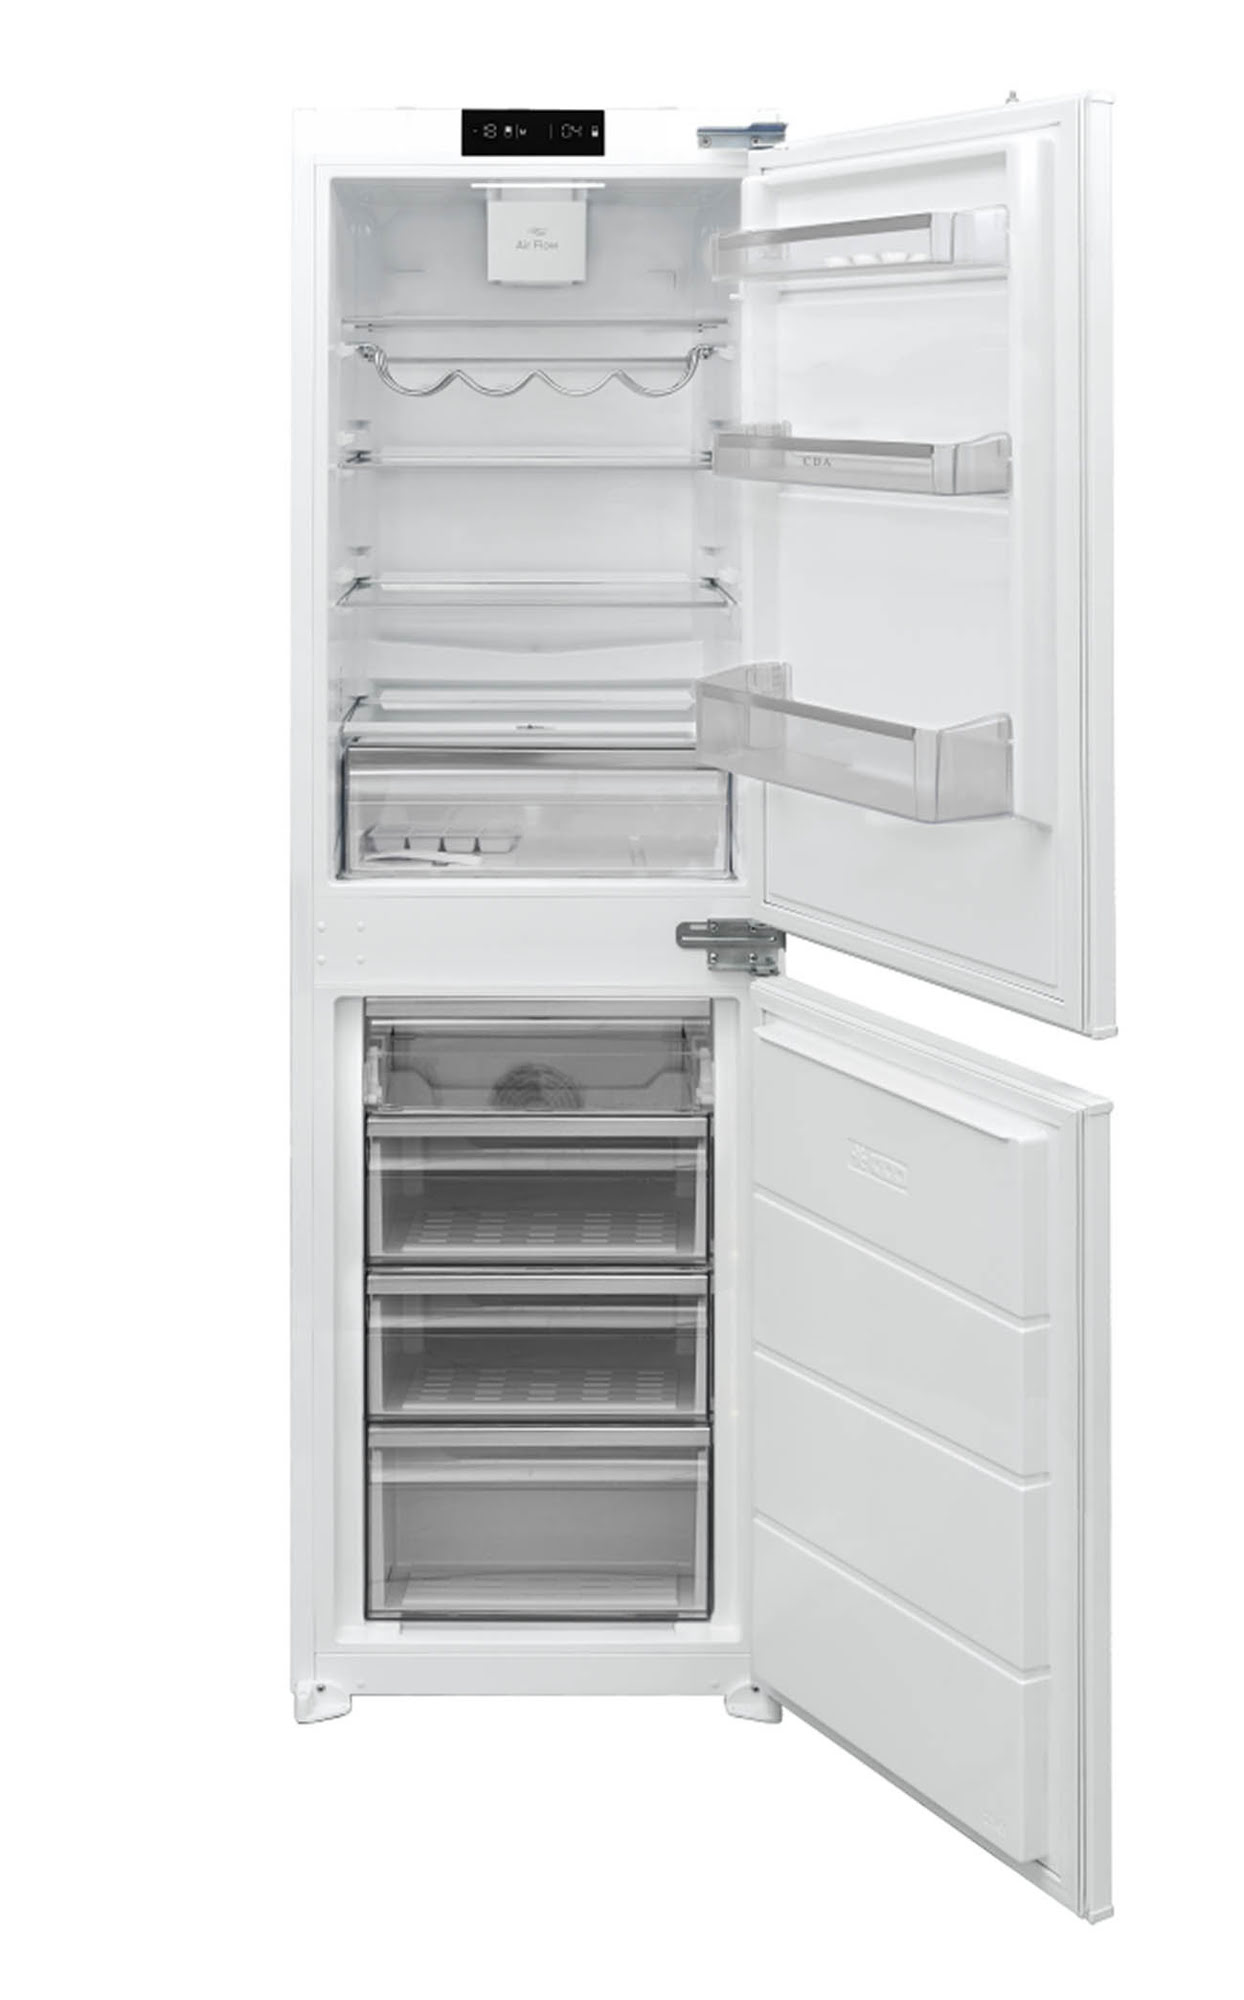 Integrated 50/50 fridge freezer